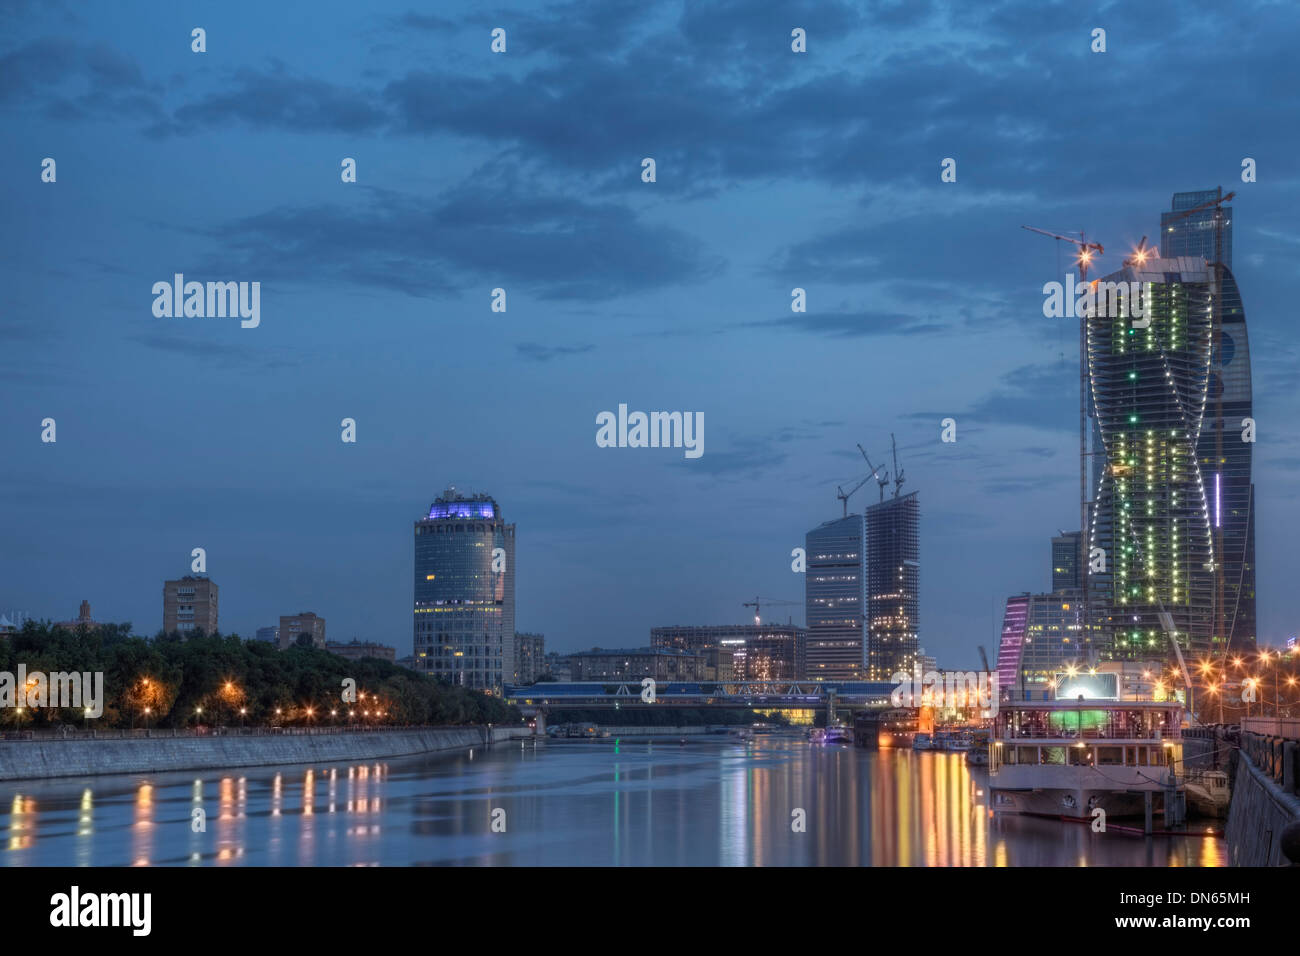 City skyline illuminated at night, Moscow, Russia Stock Photo